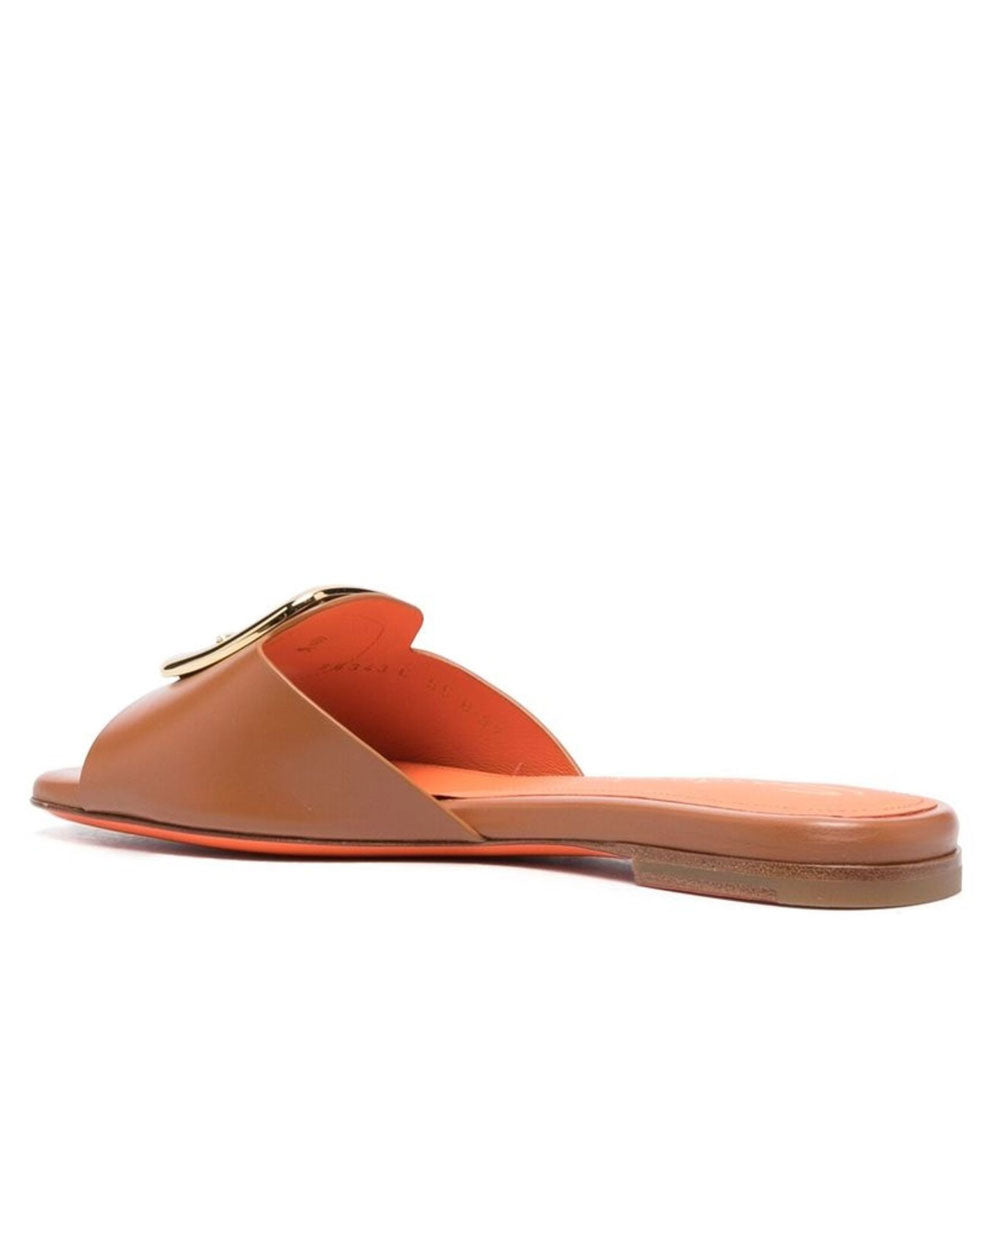 Apricot Flat Sandal in Light Brown